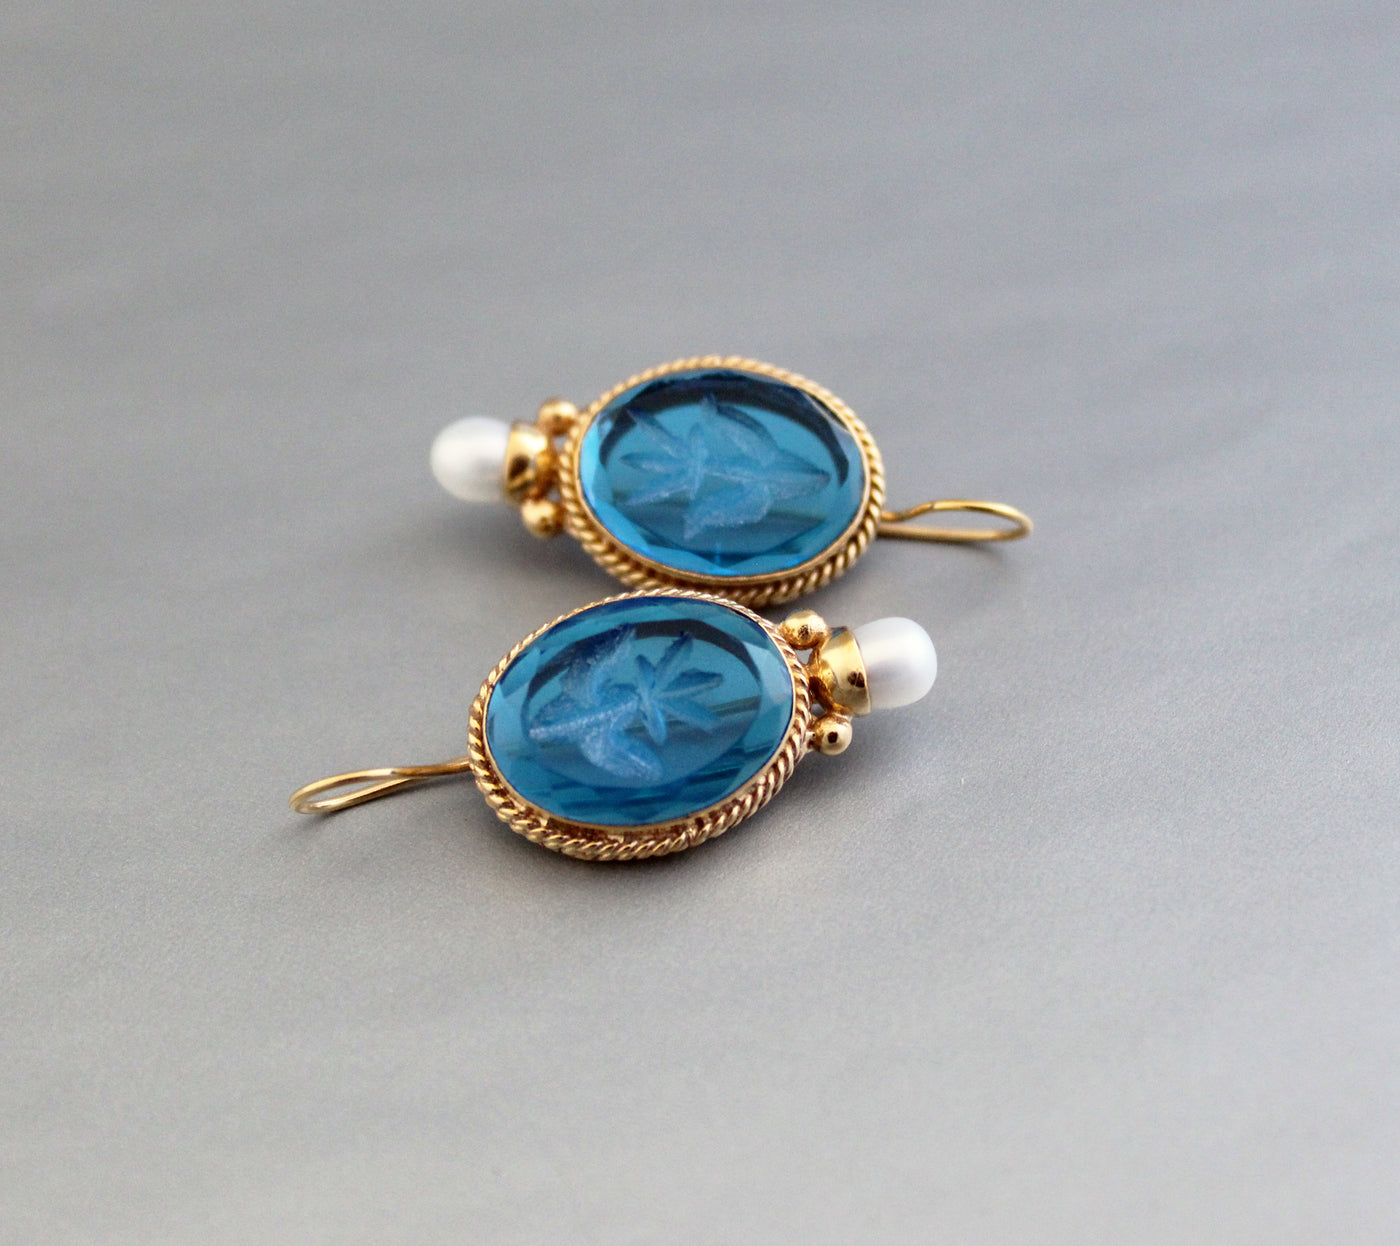 Antique Blue Intaglio Earrings